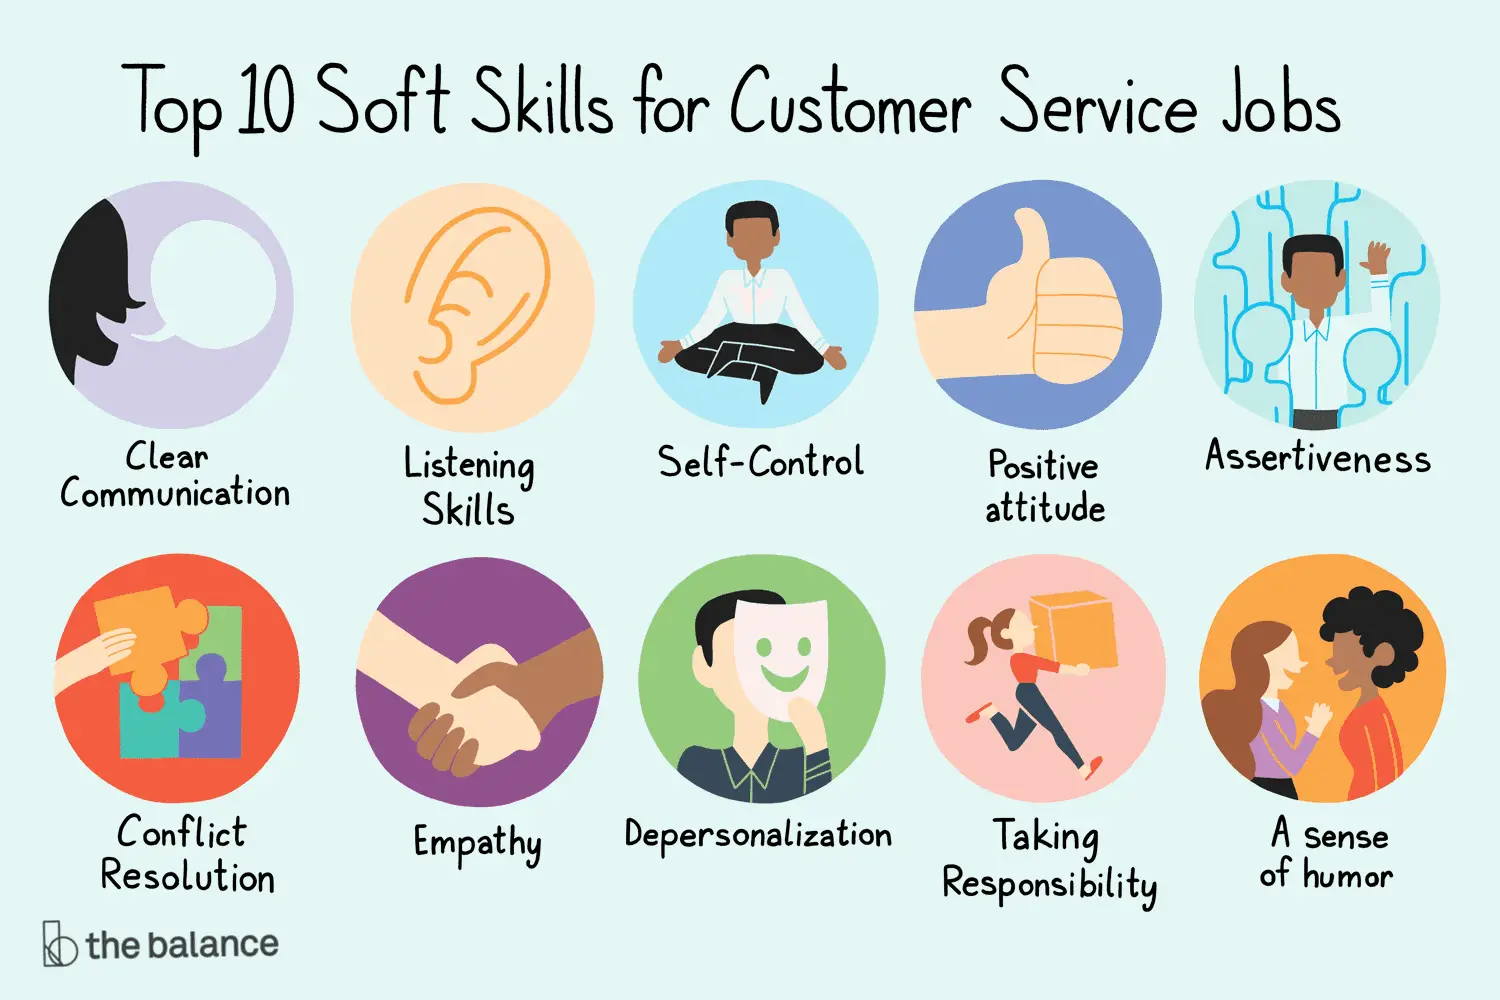 Top Soft Skills For Customer Service Jobs 2063746 V2 5bd0882b46e0fb0026edd456 